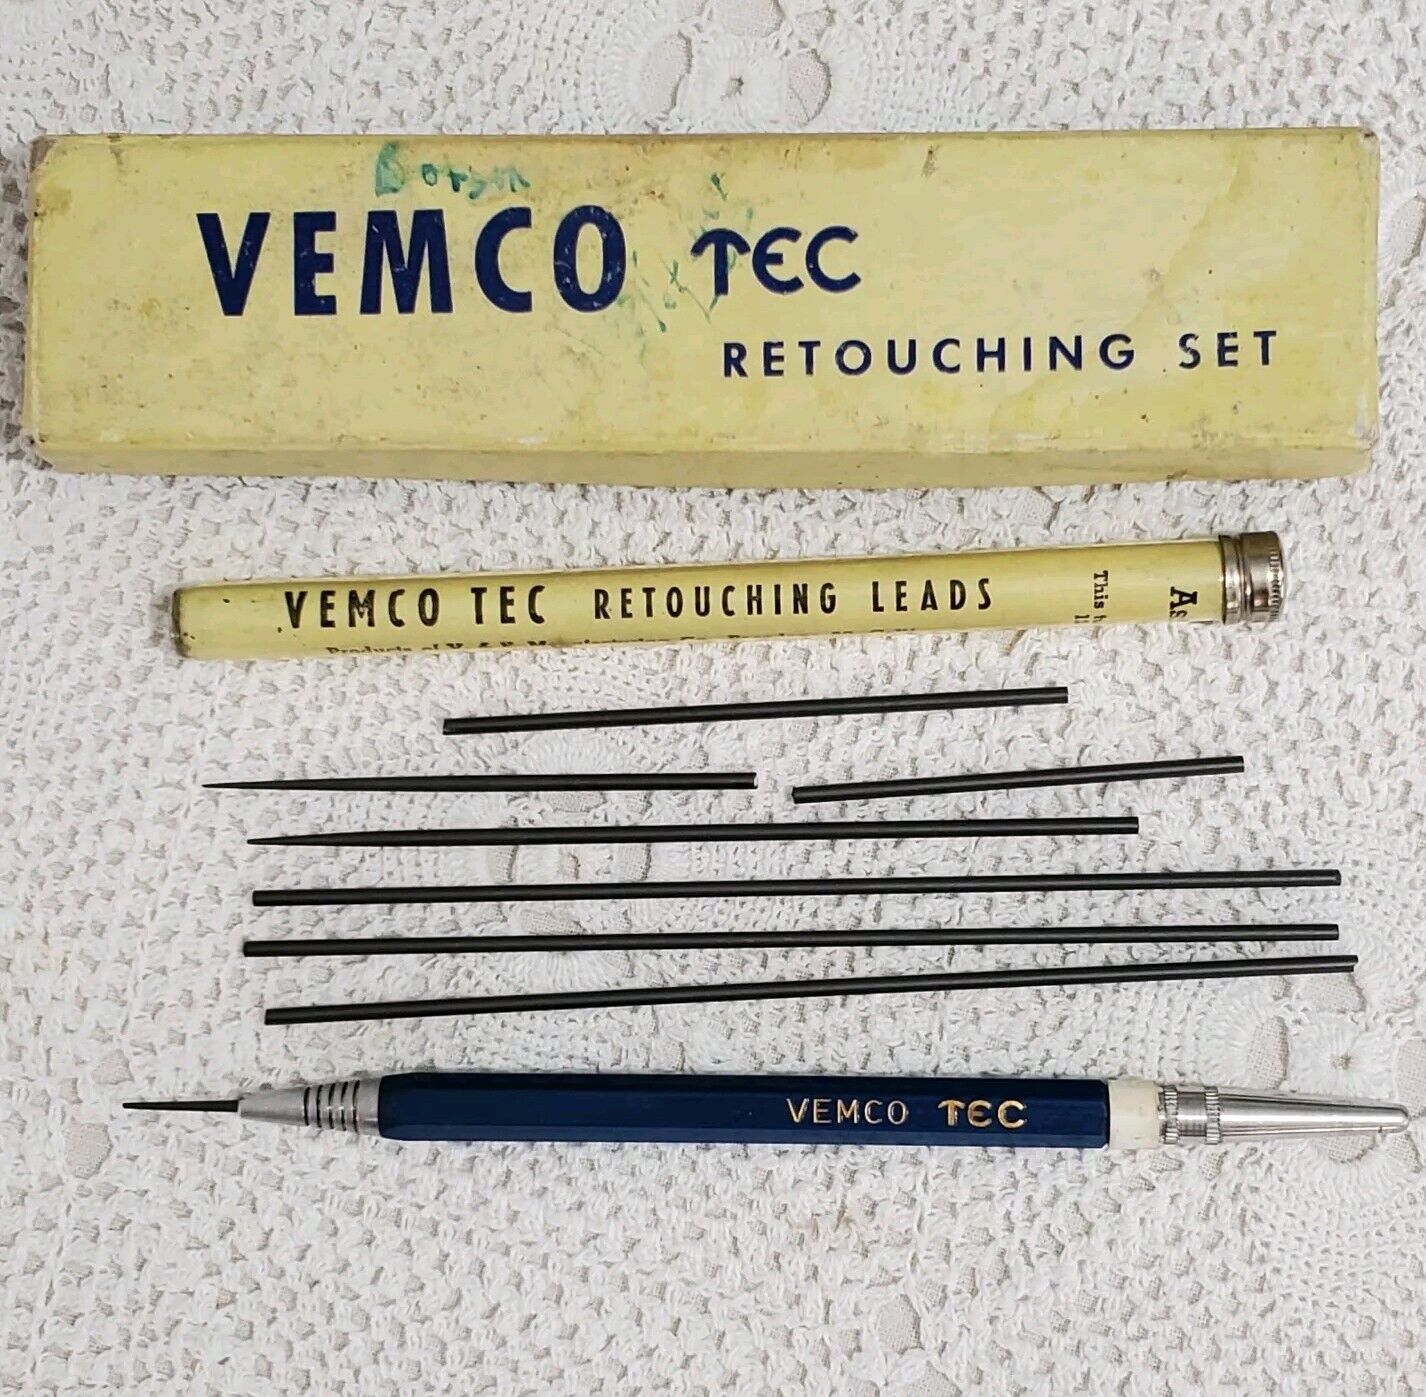 Vintage VEMCO TEC Retouching Set Box Pencil Leads Mid-century Nice Condition